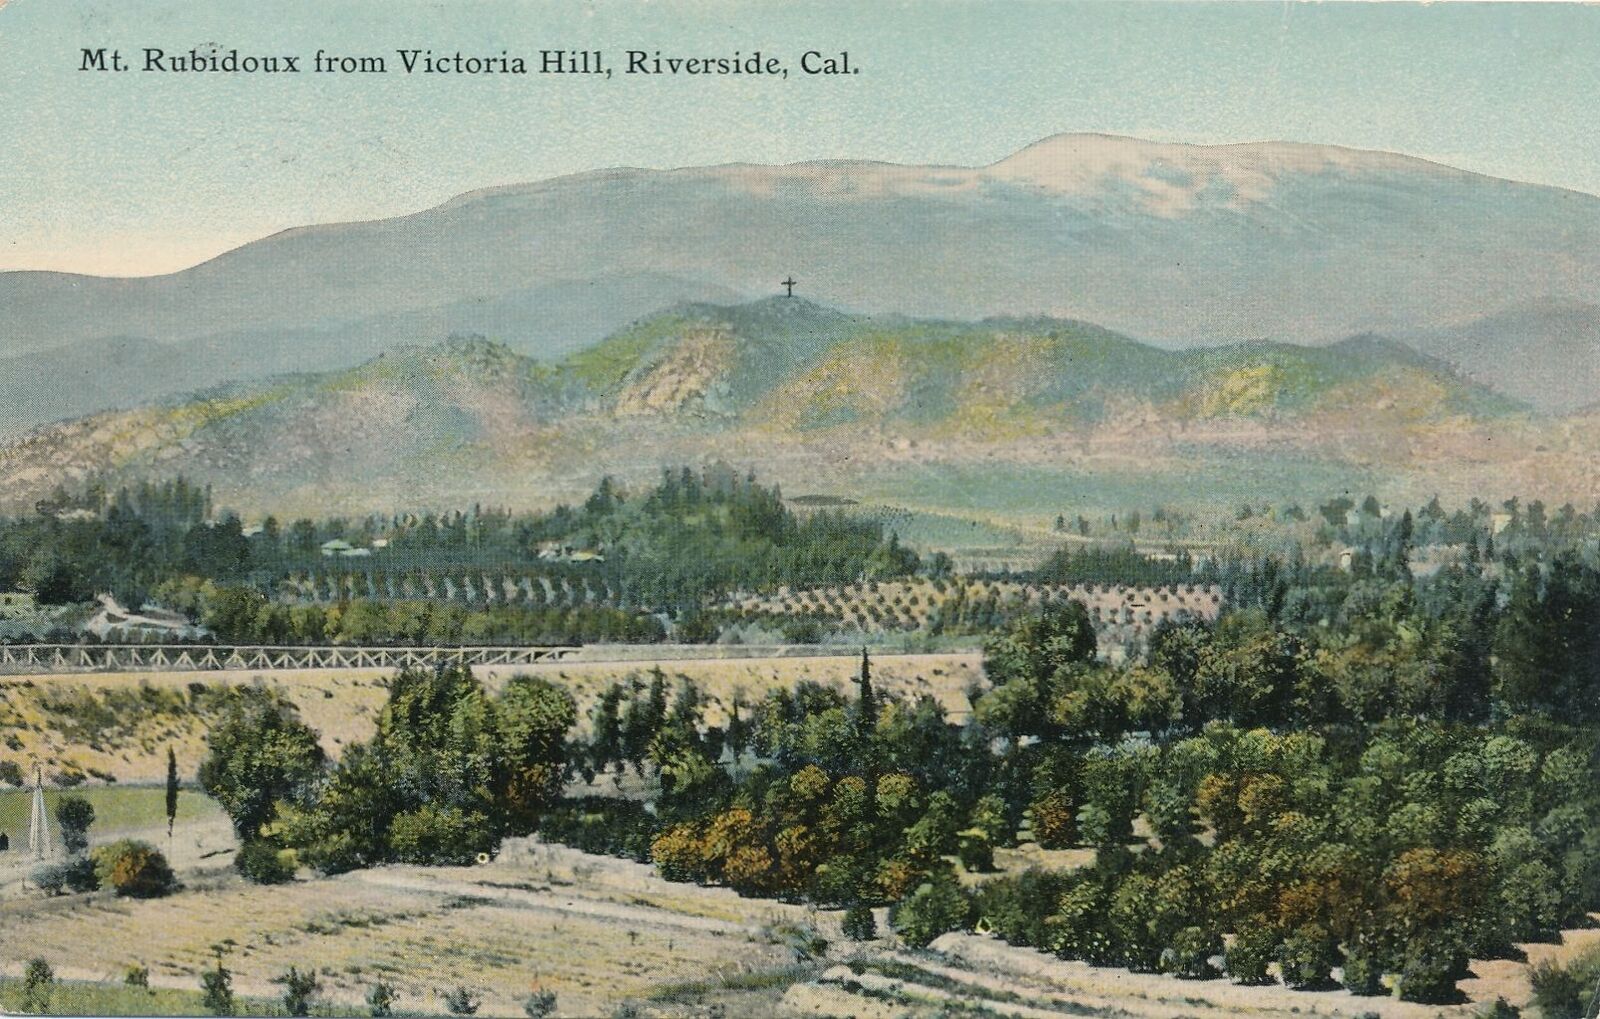 RIVERSIDE CA - Mt. Rubidoux From Victoria Hill Postcard - 1912